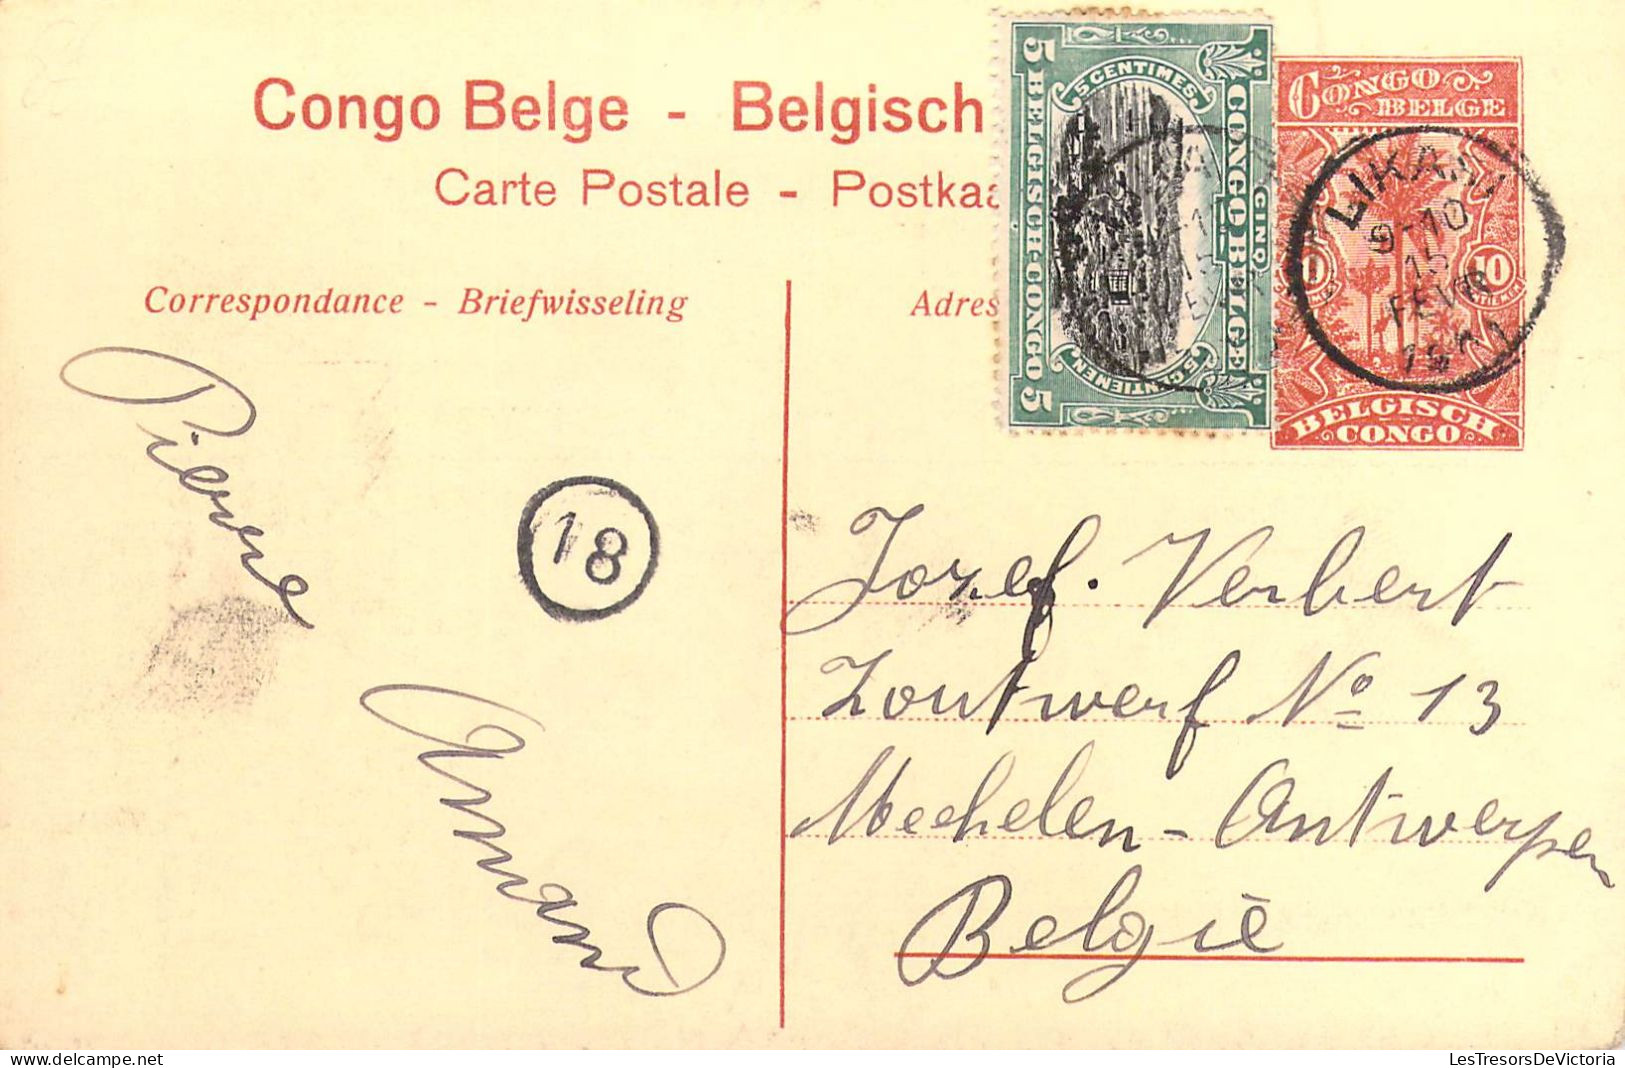 CONGO BELGE - Habitations Sur Le Haut Congo - Carte Postale Ancienne - Congo Belga